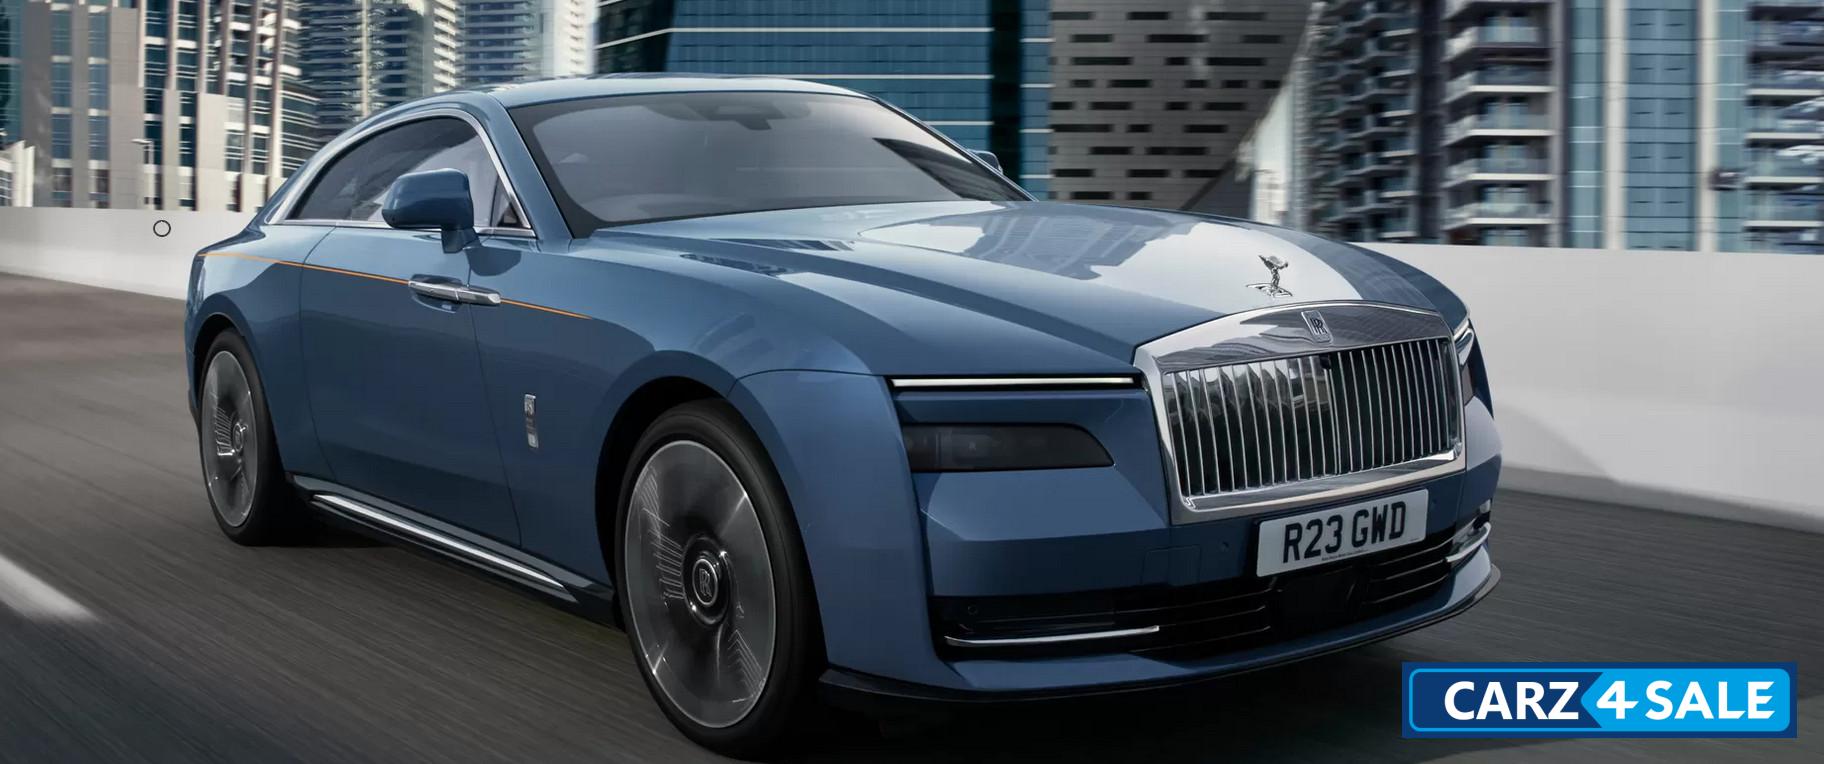 Rolls Royce Spectre Ev Launched